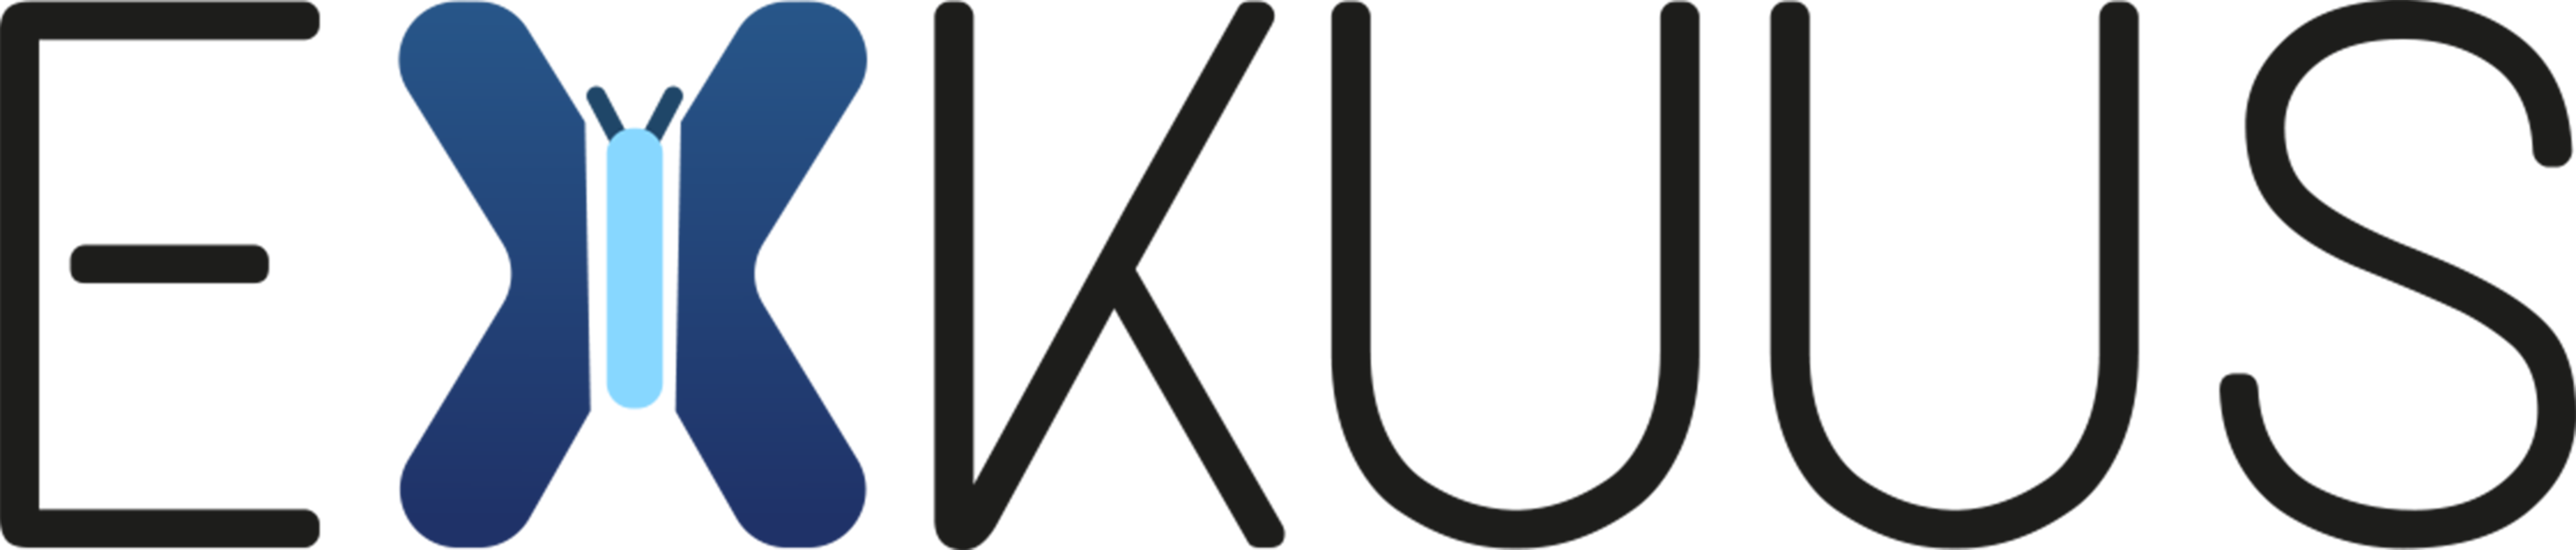 logo exkuus